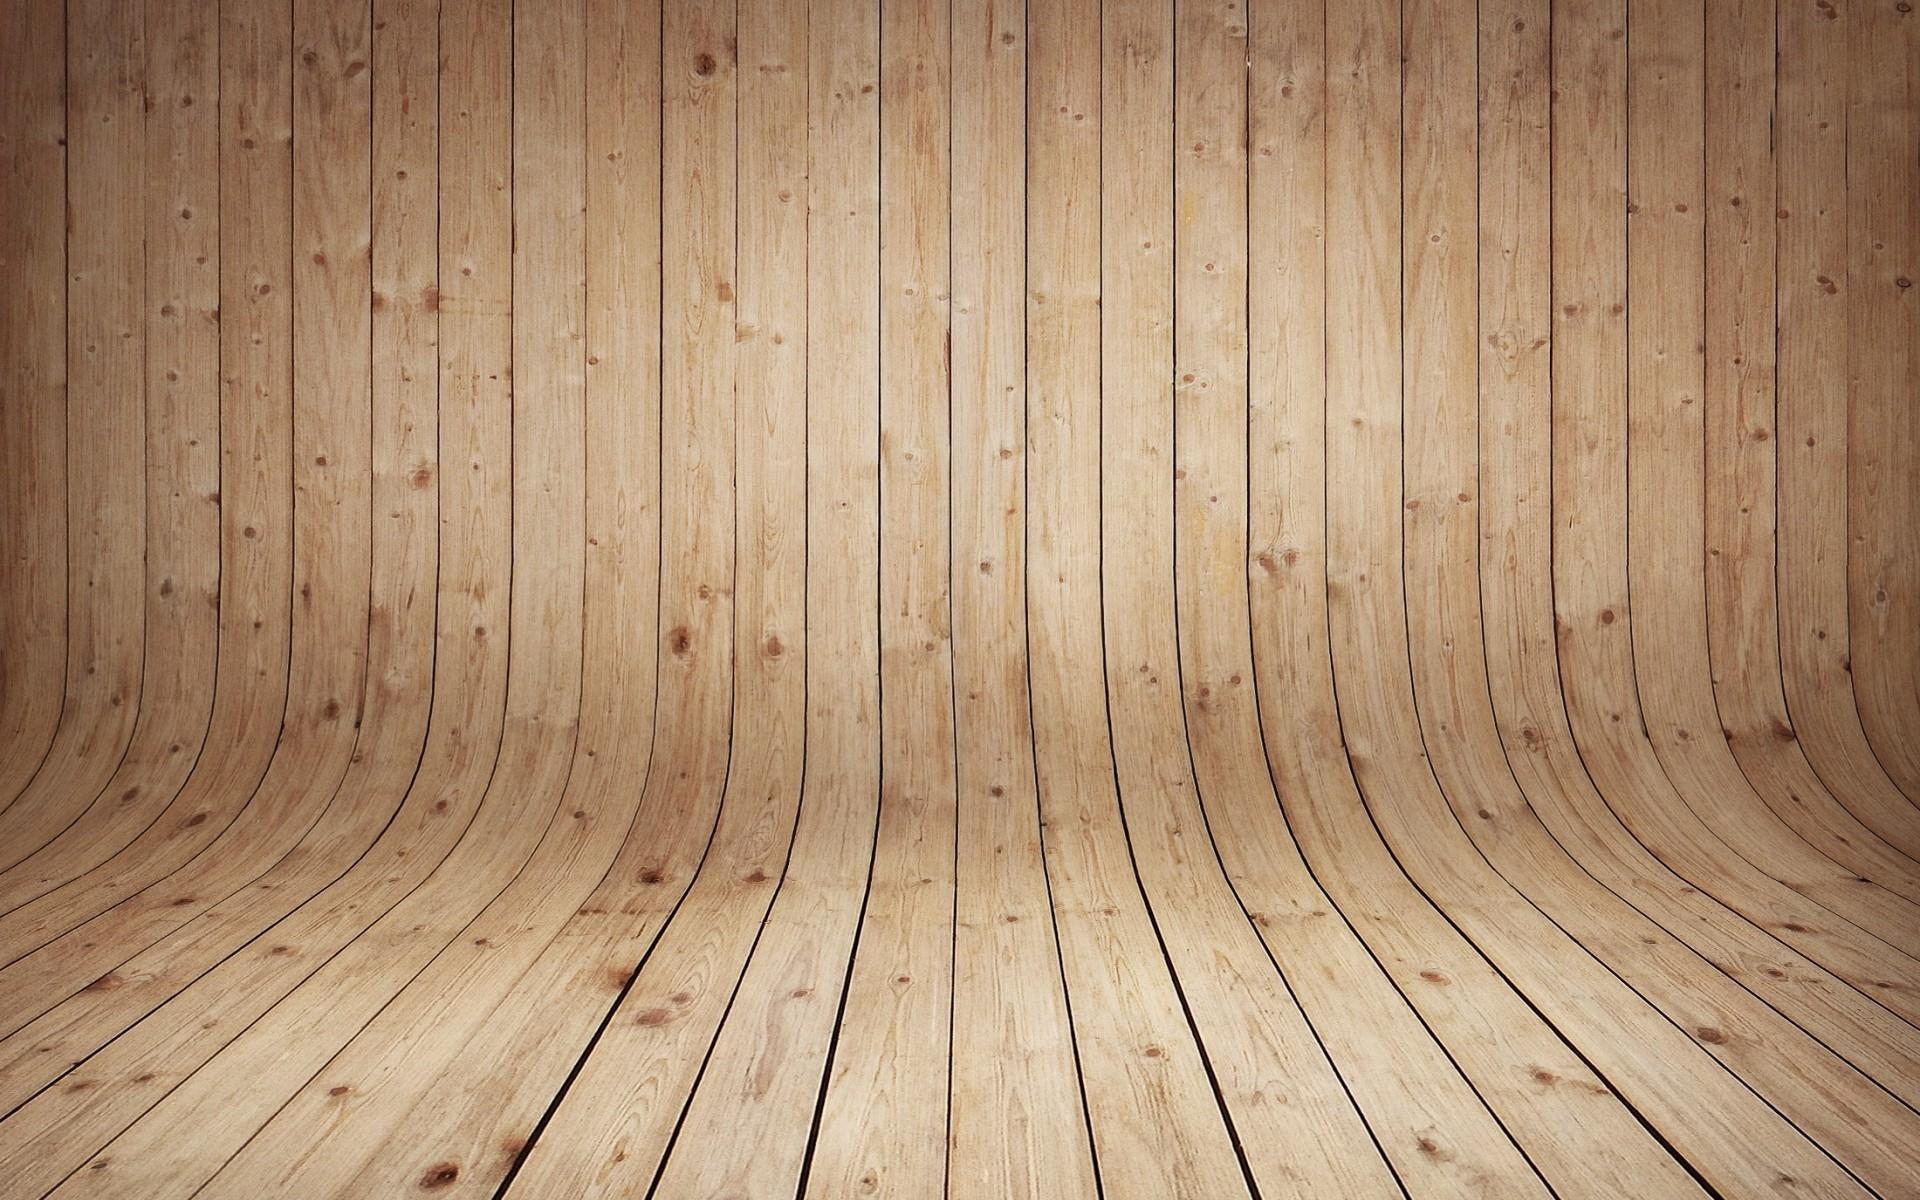 HD Wood Grain Curved Floor Wallpaper